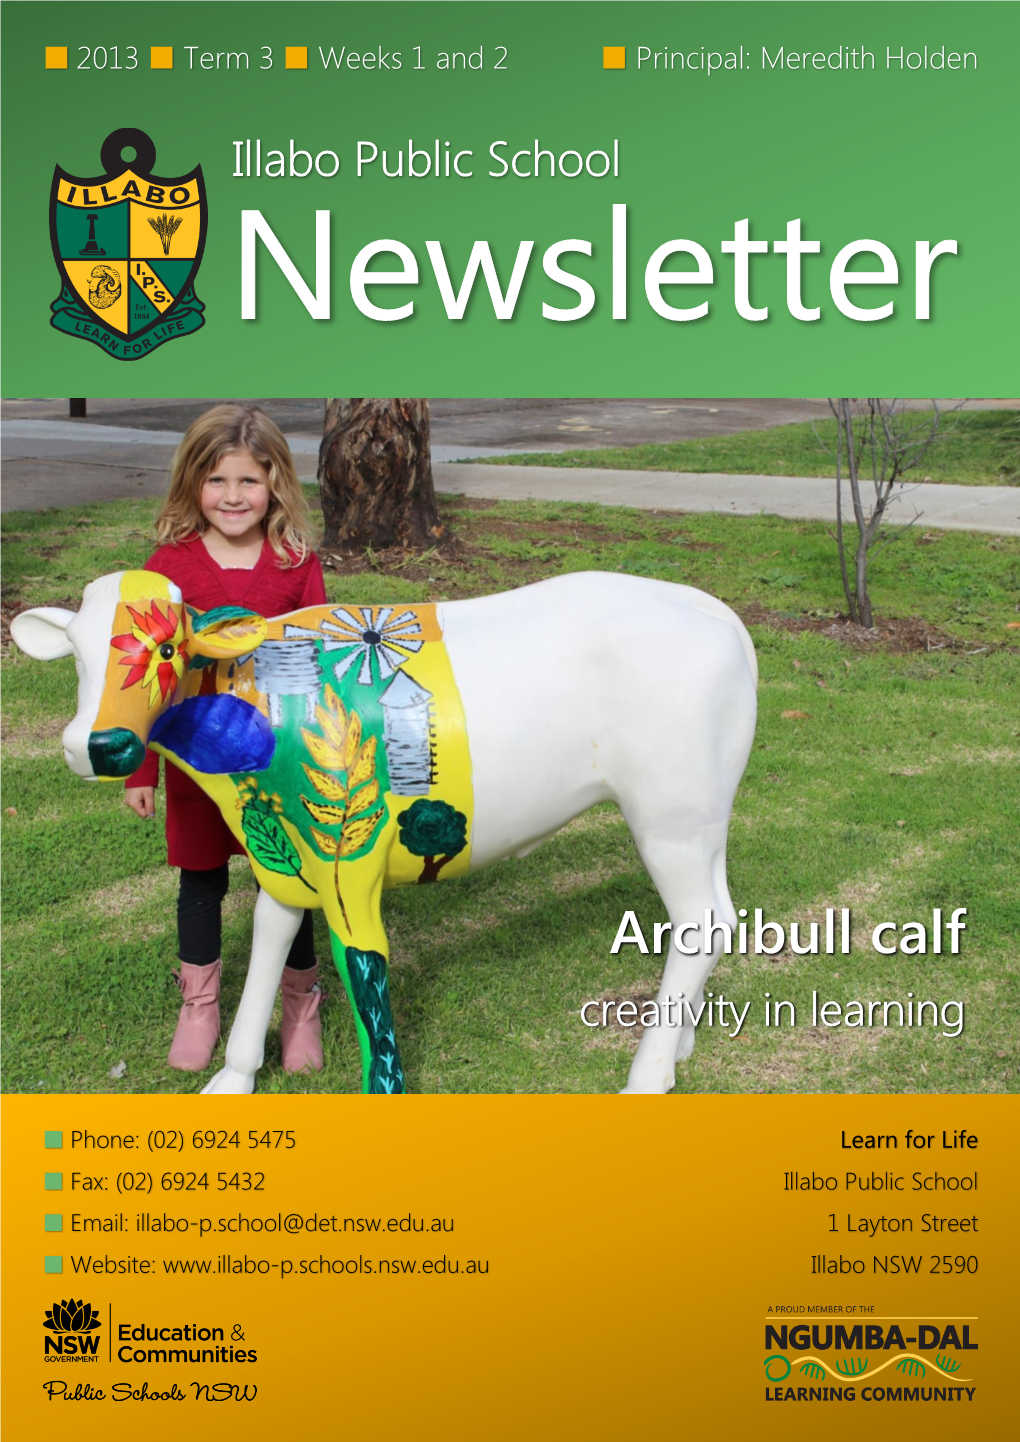 Archibull Calf Creativity in Learning